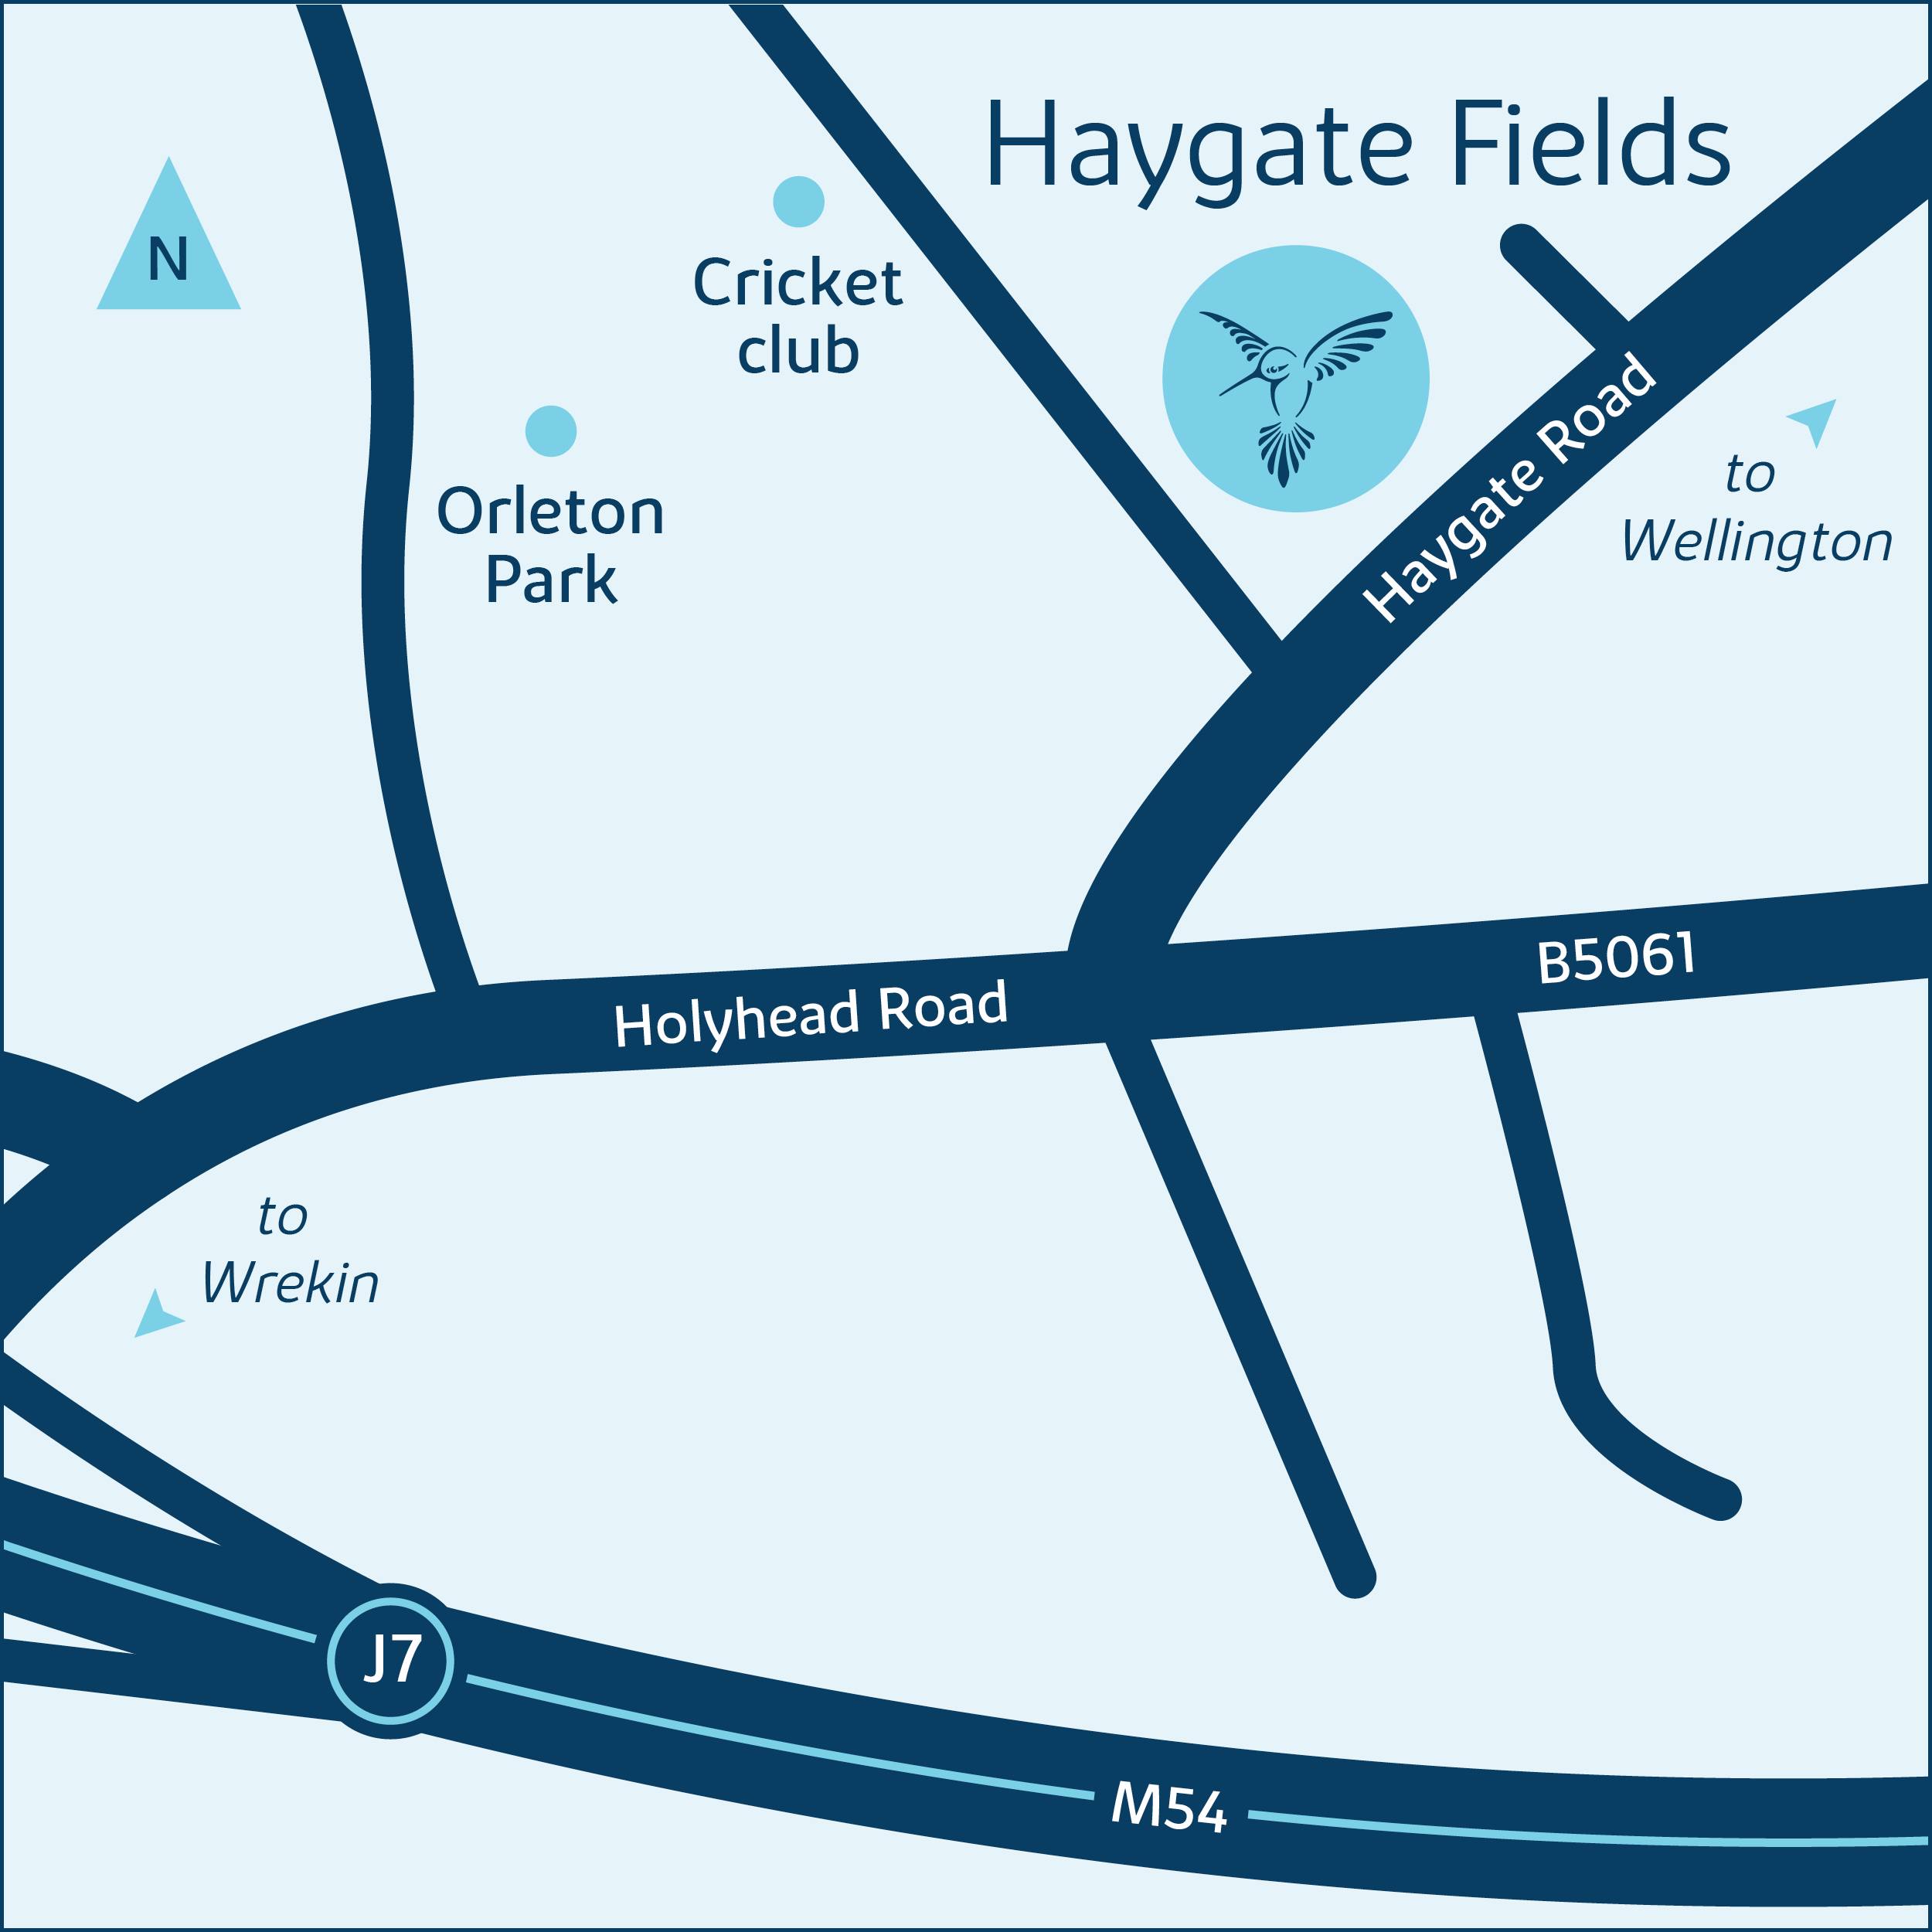 Development map for haygate fields